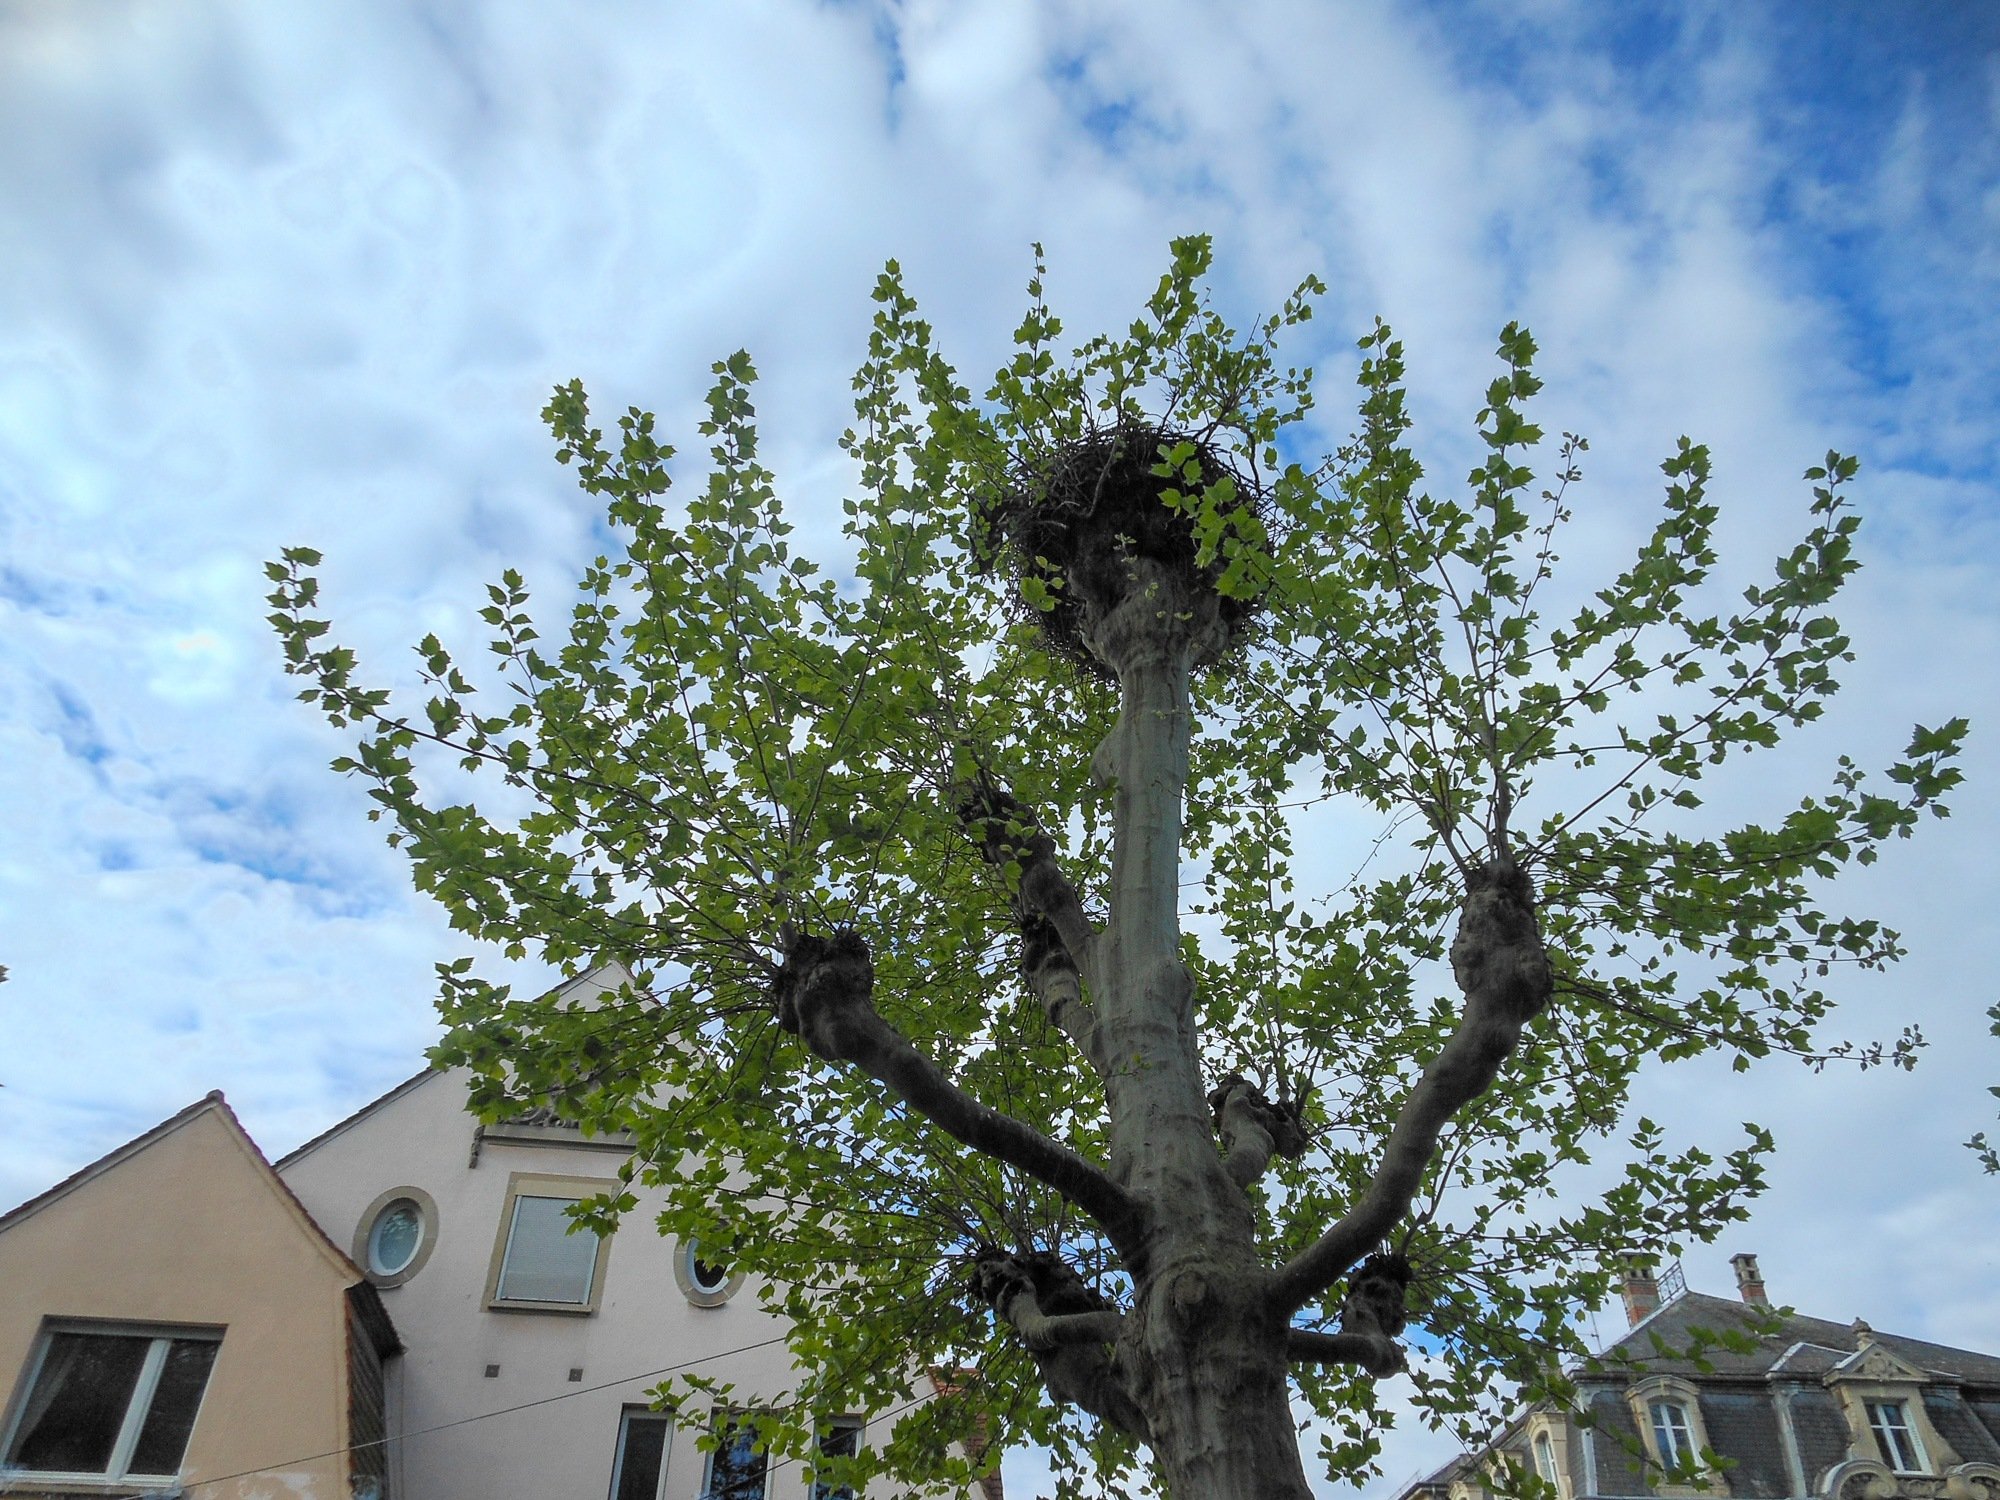 A stork nest in the neighborhood near Parc d'Orangerie